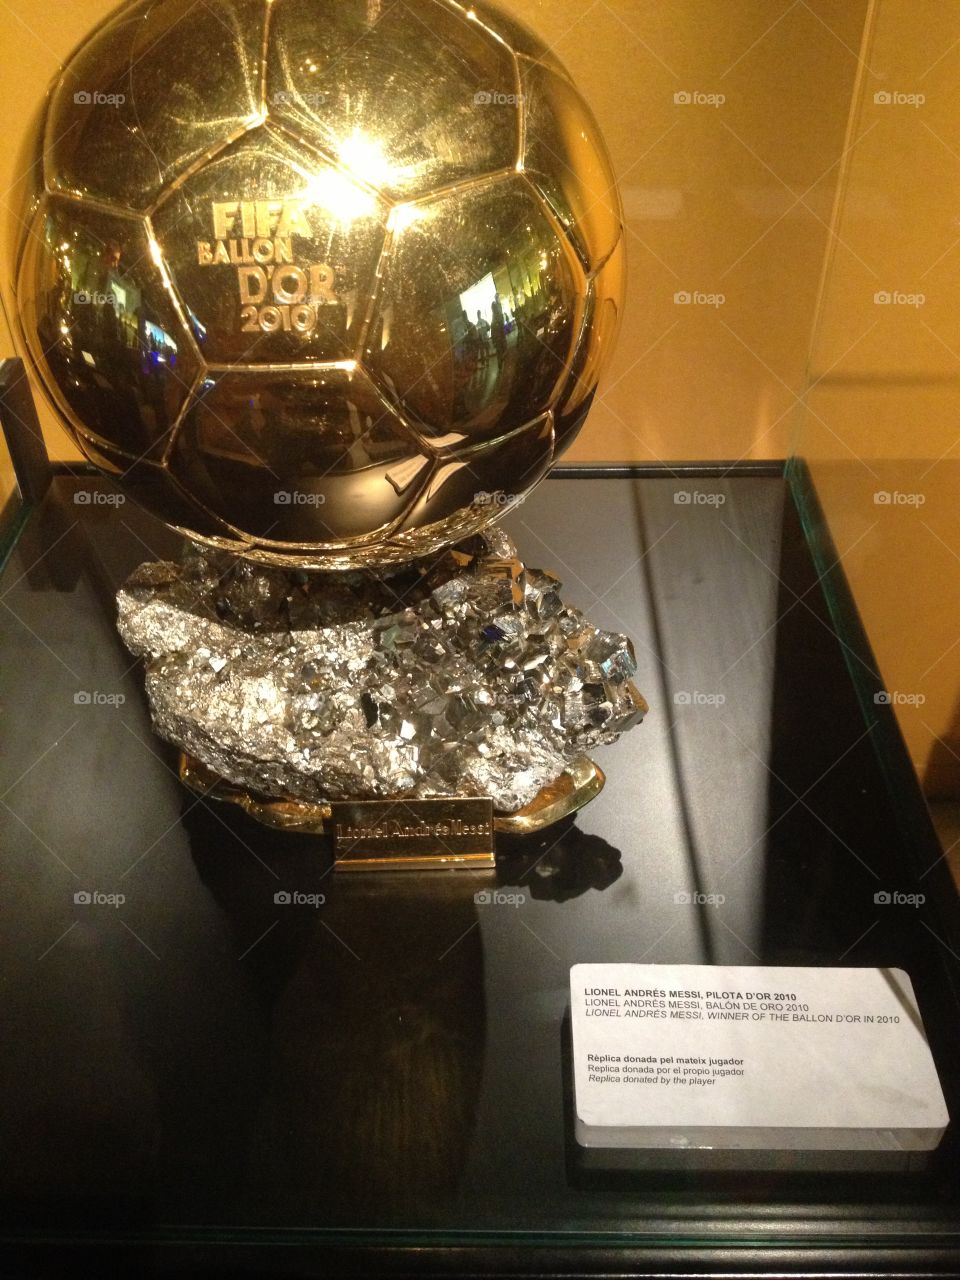 Lionel Messi ballor d or 2010 trophy 